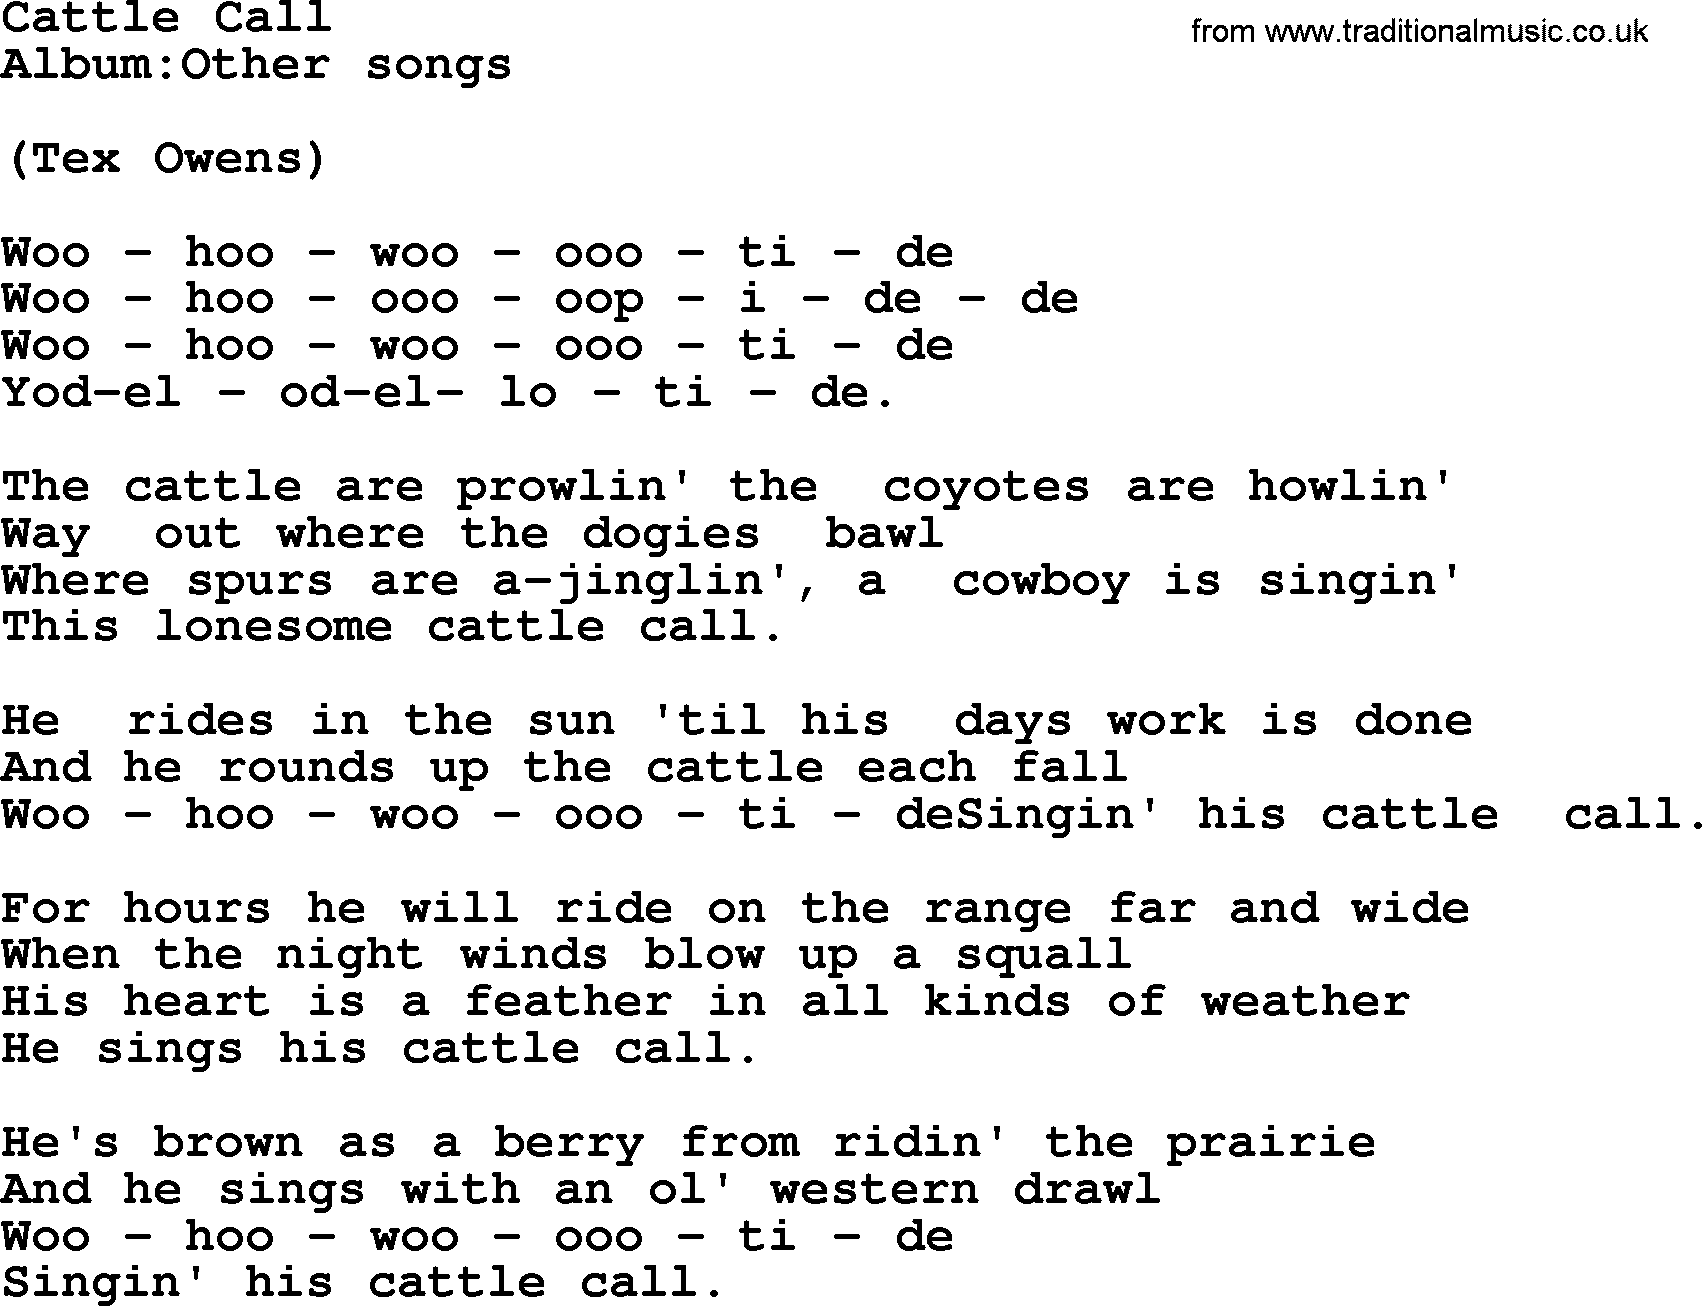 Emmylou Harris song: Cattle Call lyrics